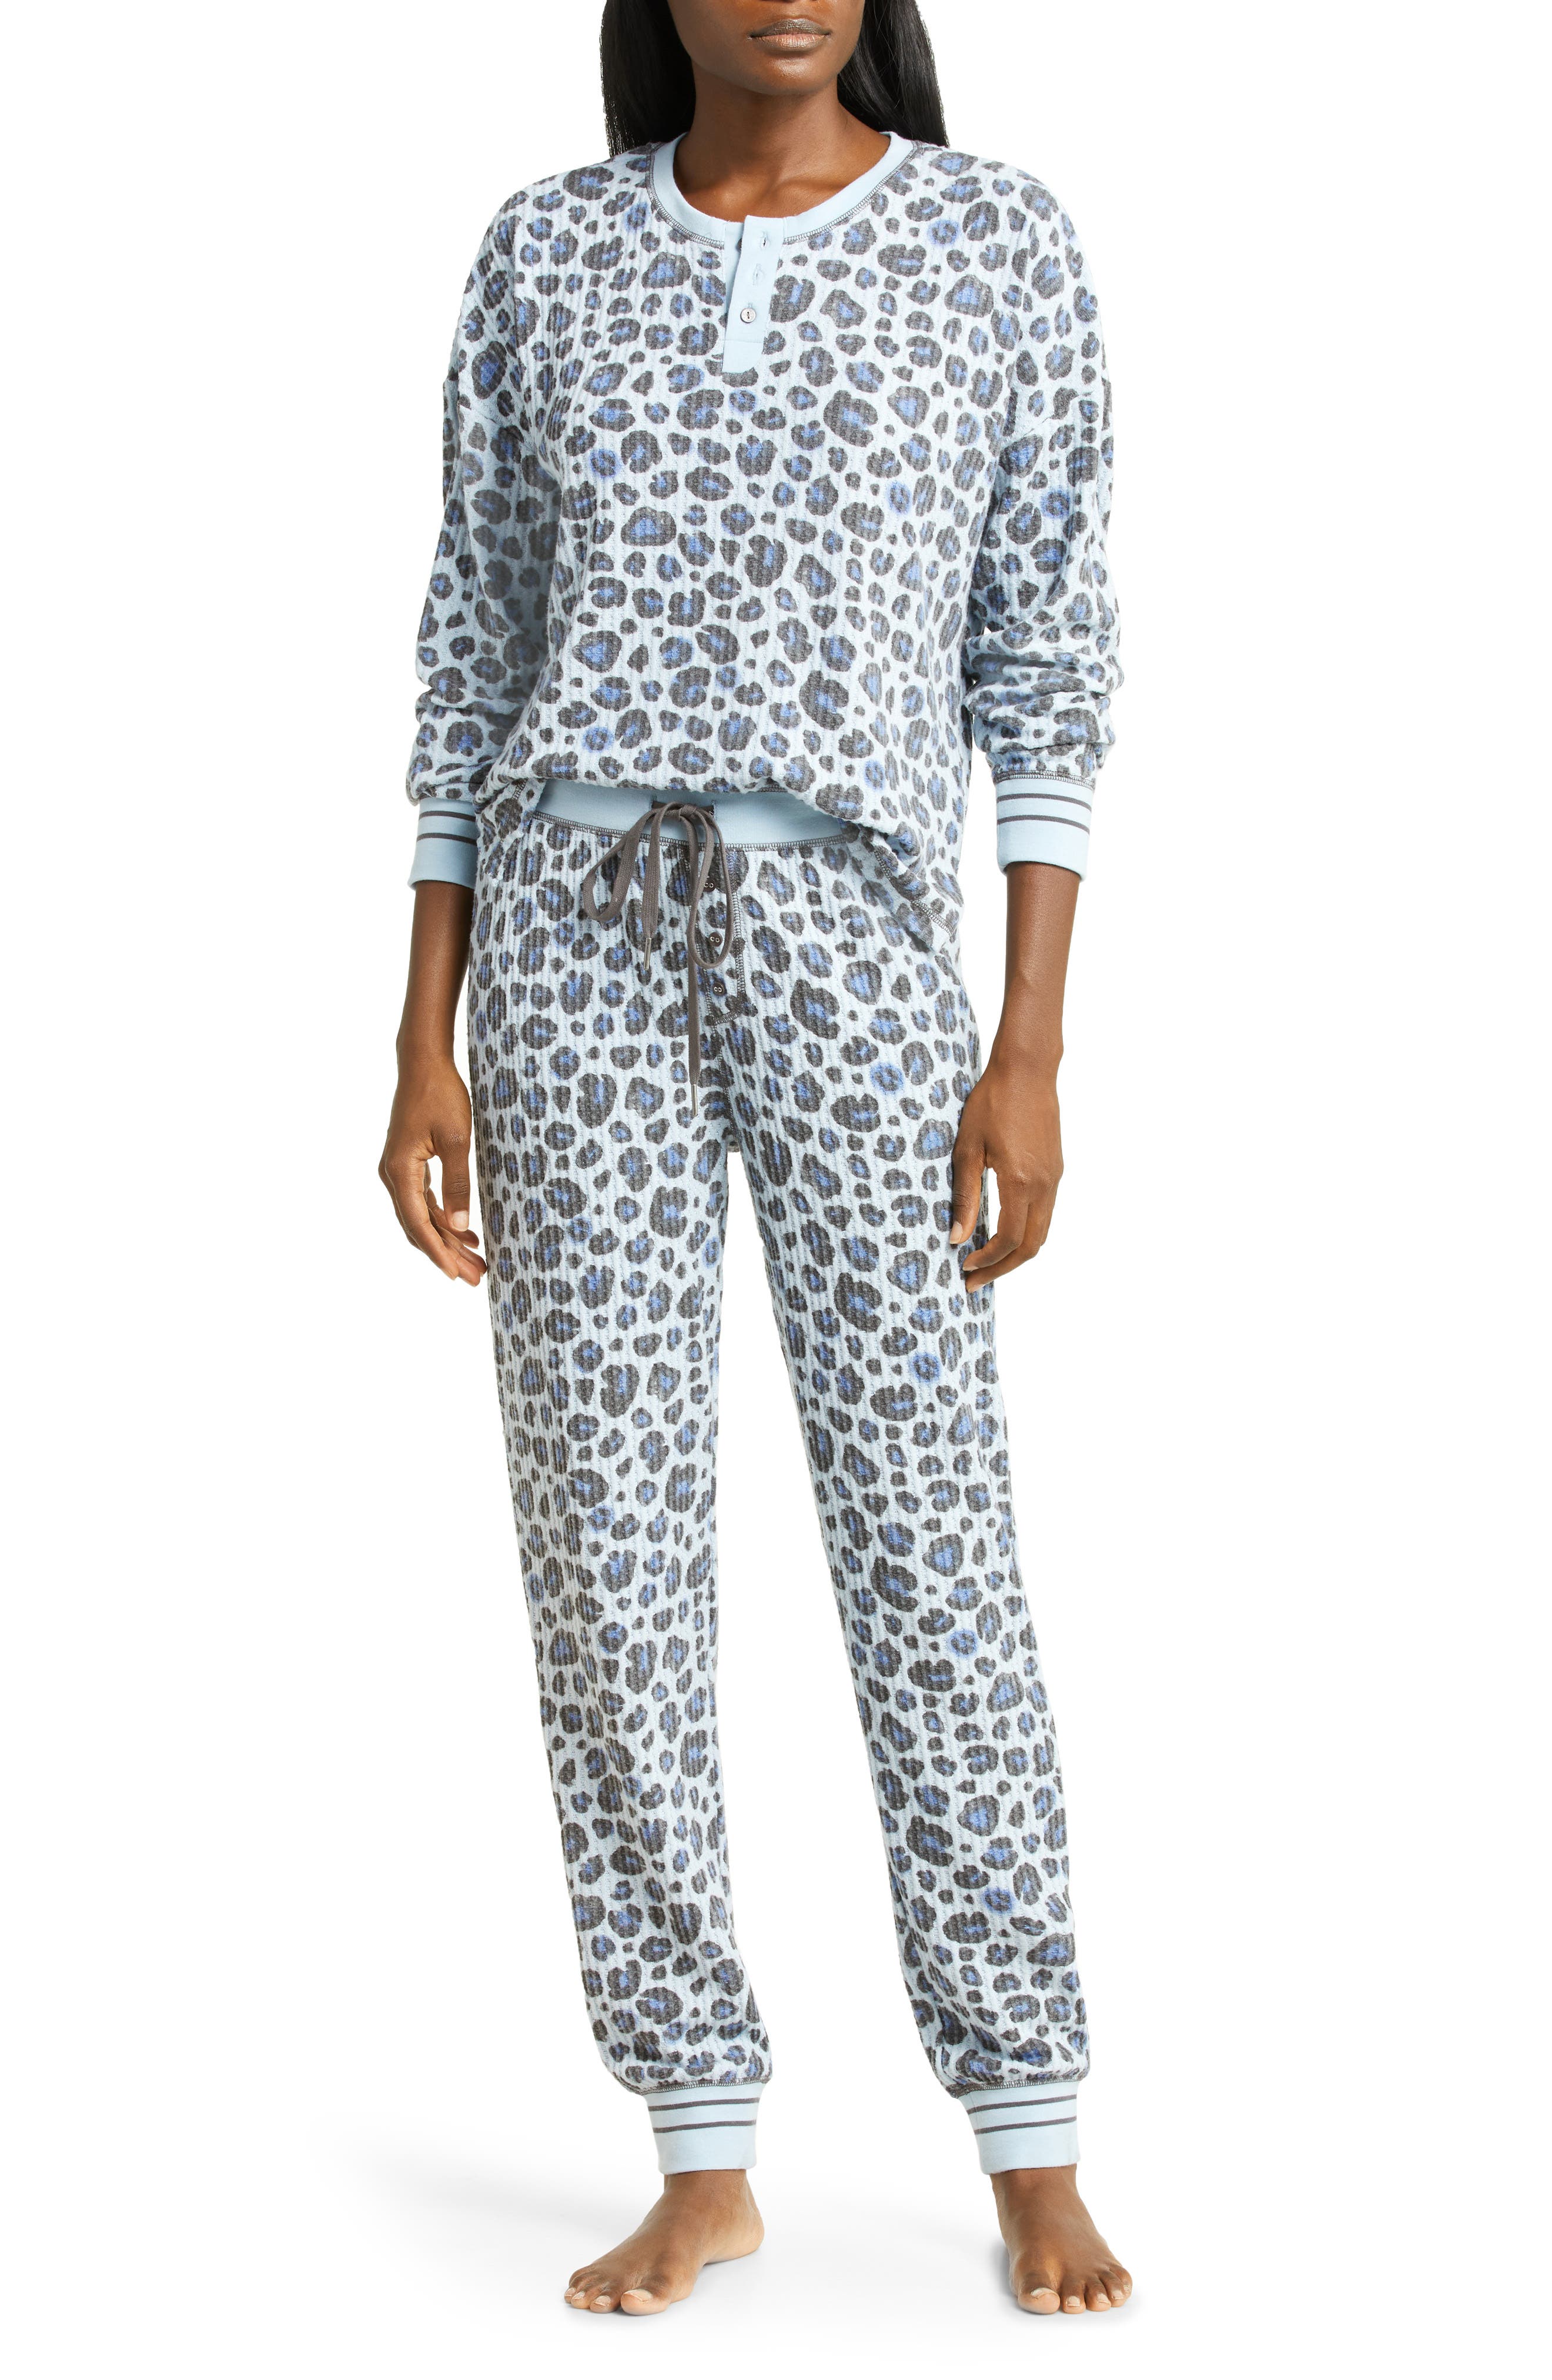 Lattelier Comfy Pure Cotton Set in Grey Womens Clothing Nightwear and sleepwear Pyjamas 